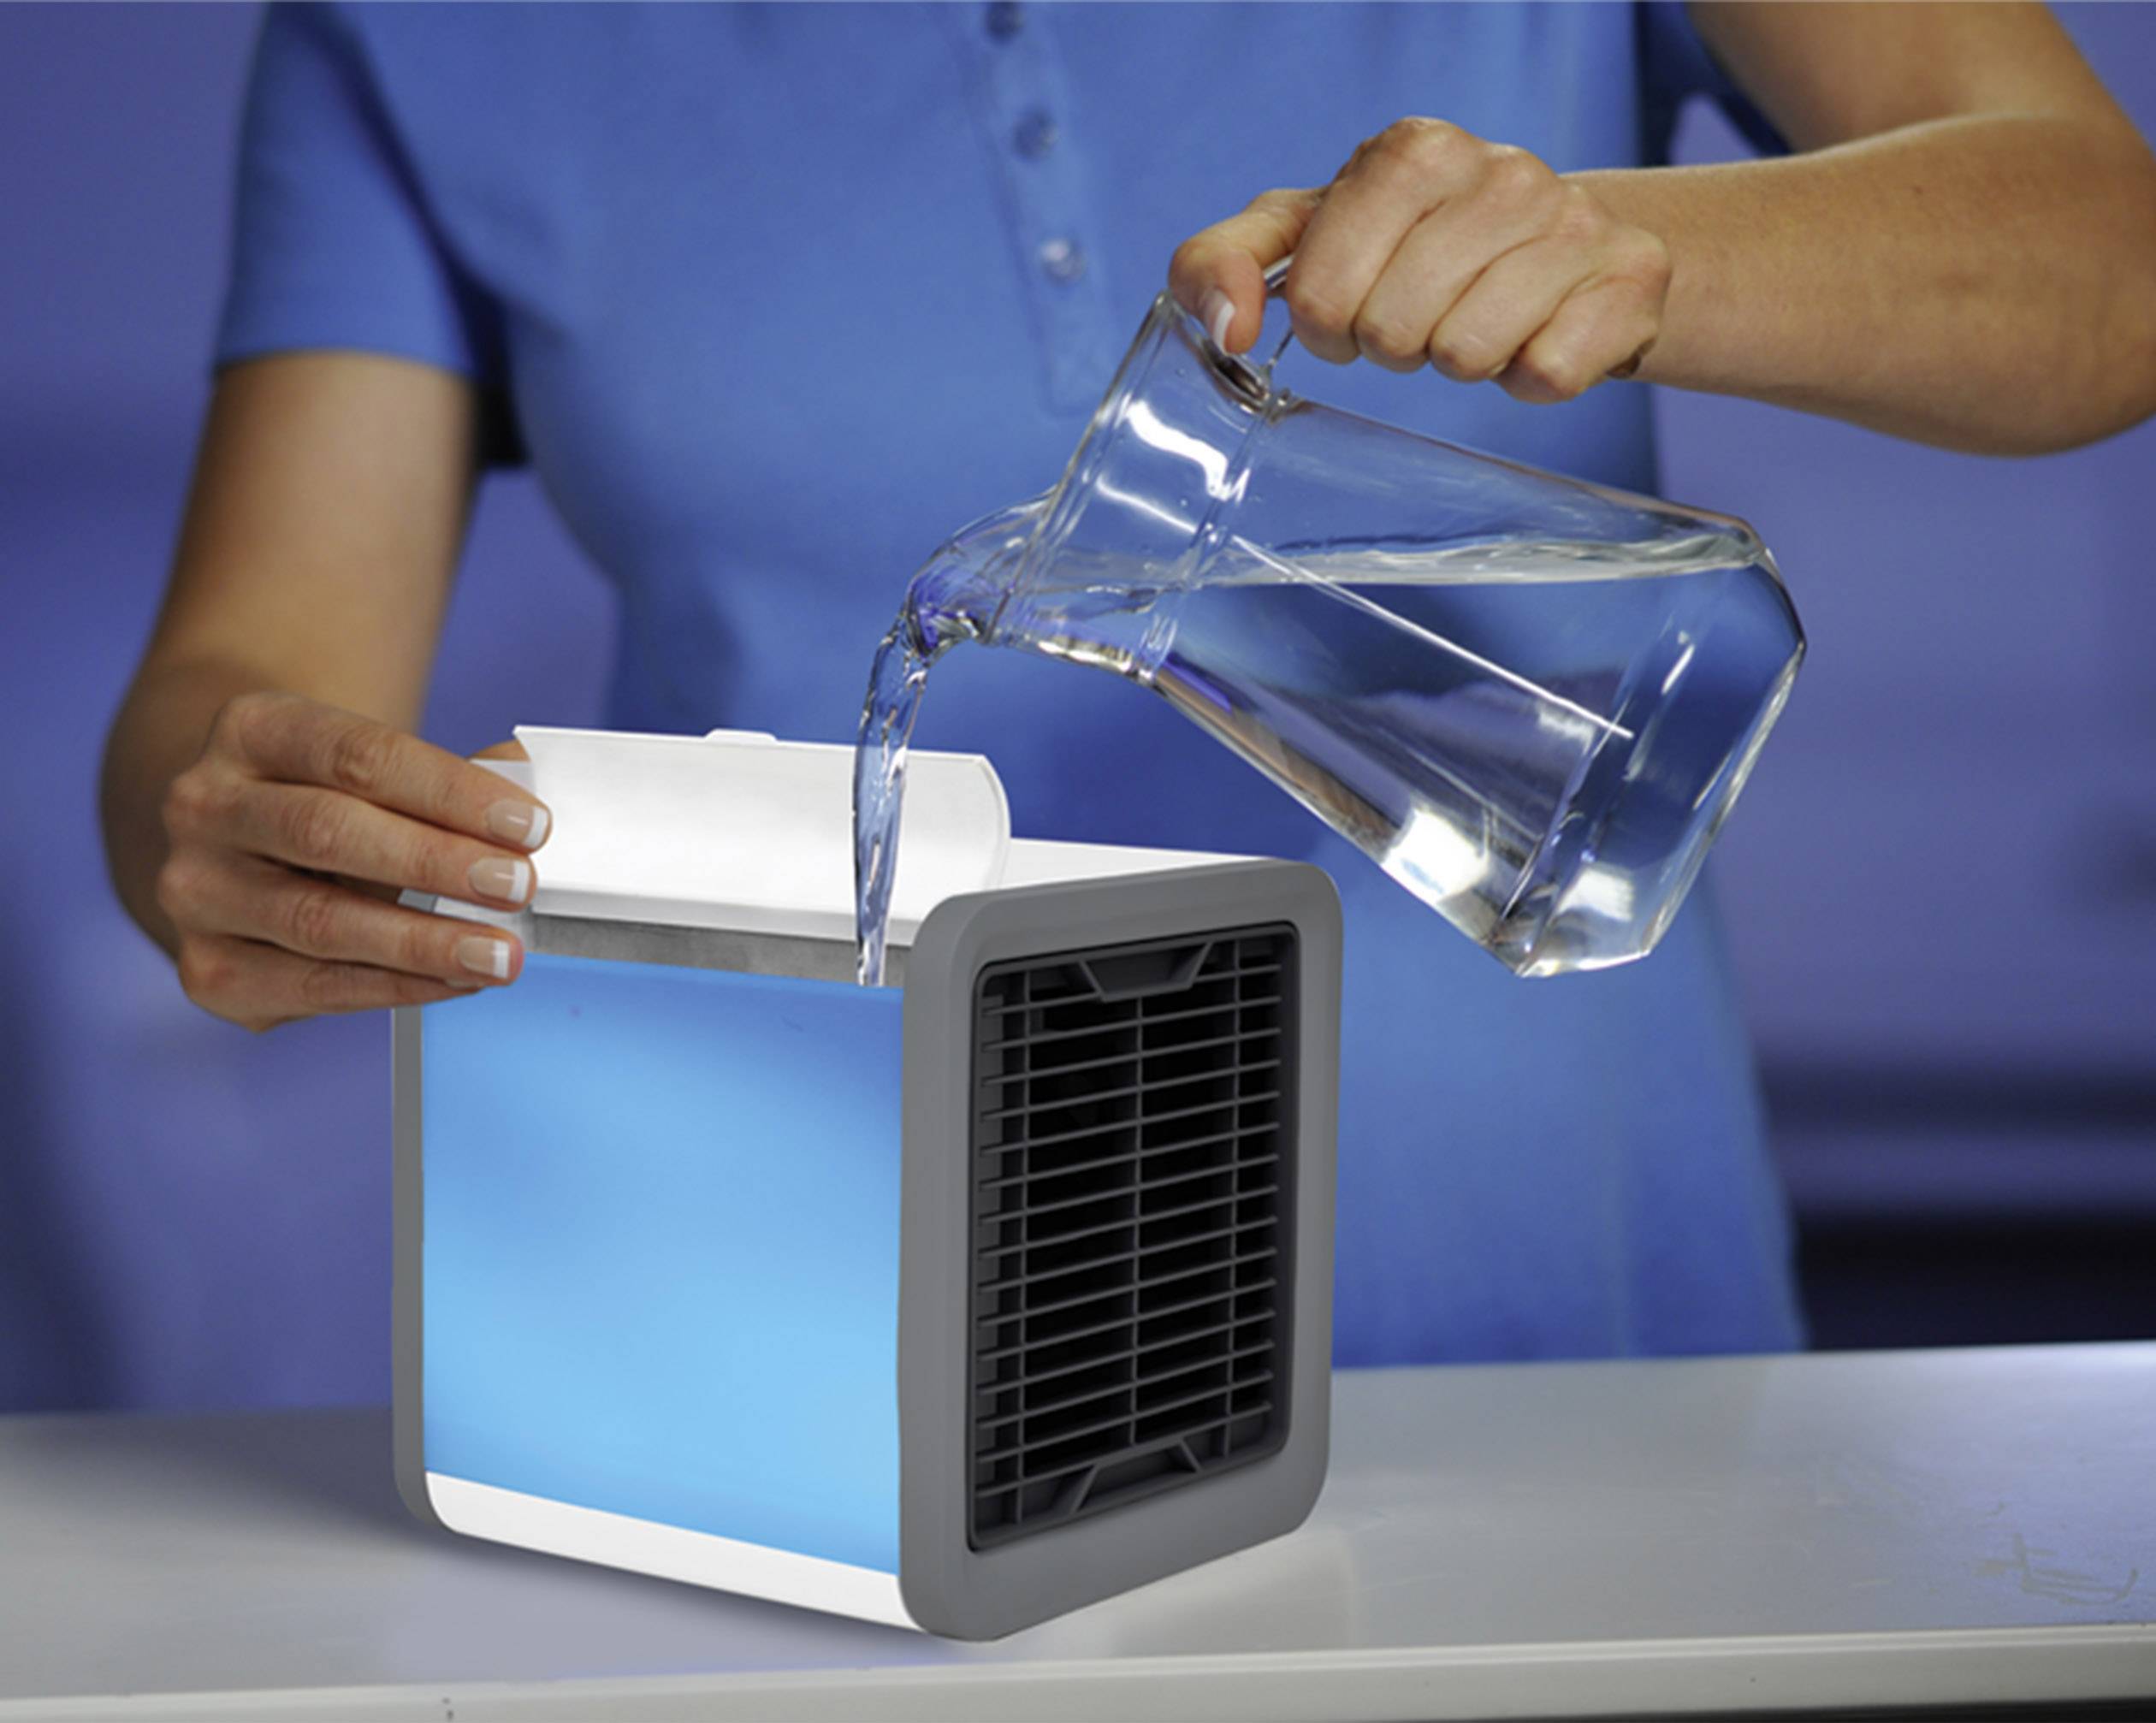 MediaShop Arctic Air Air cooler 10 W (L x W x H) 17 x 17 x 17 cm White, Grey Selectable lighting | Conrad.com